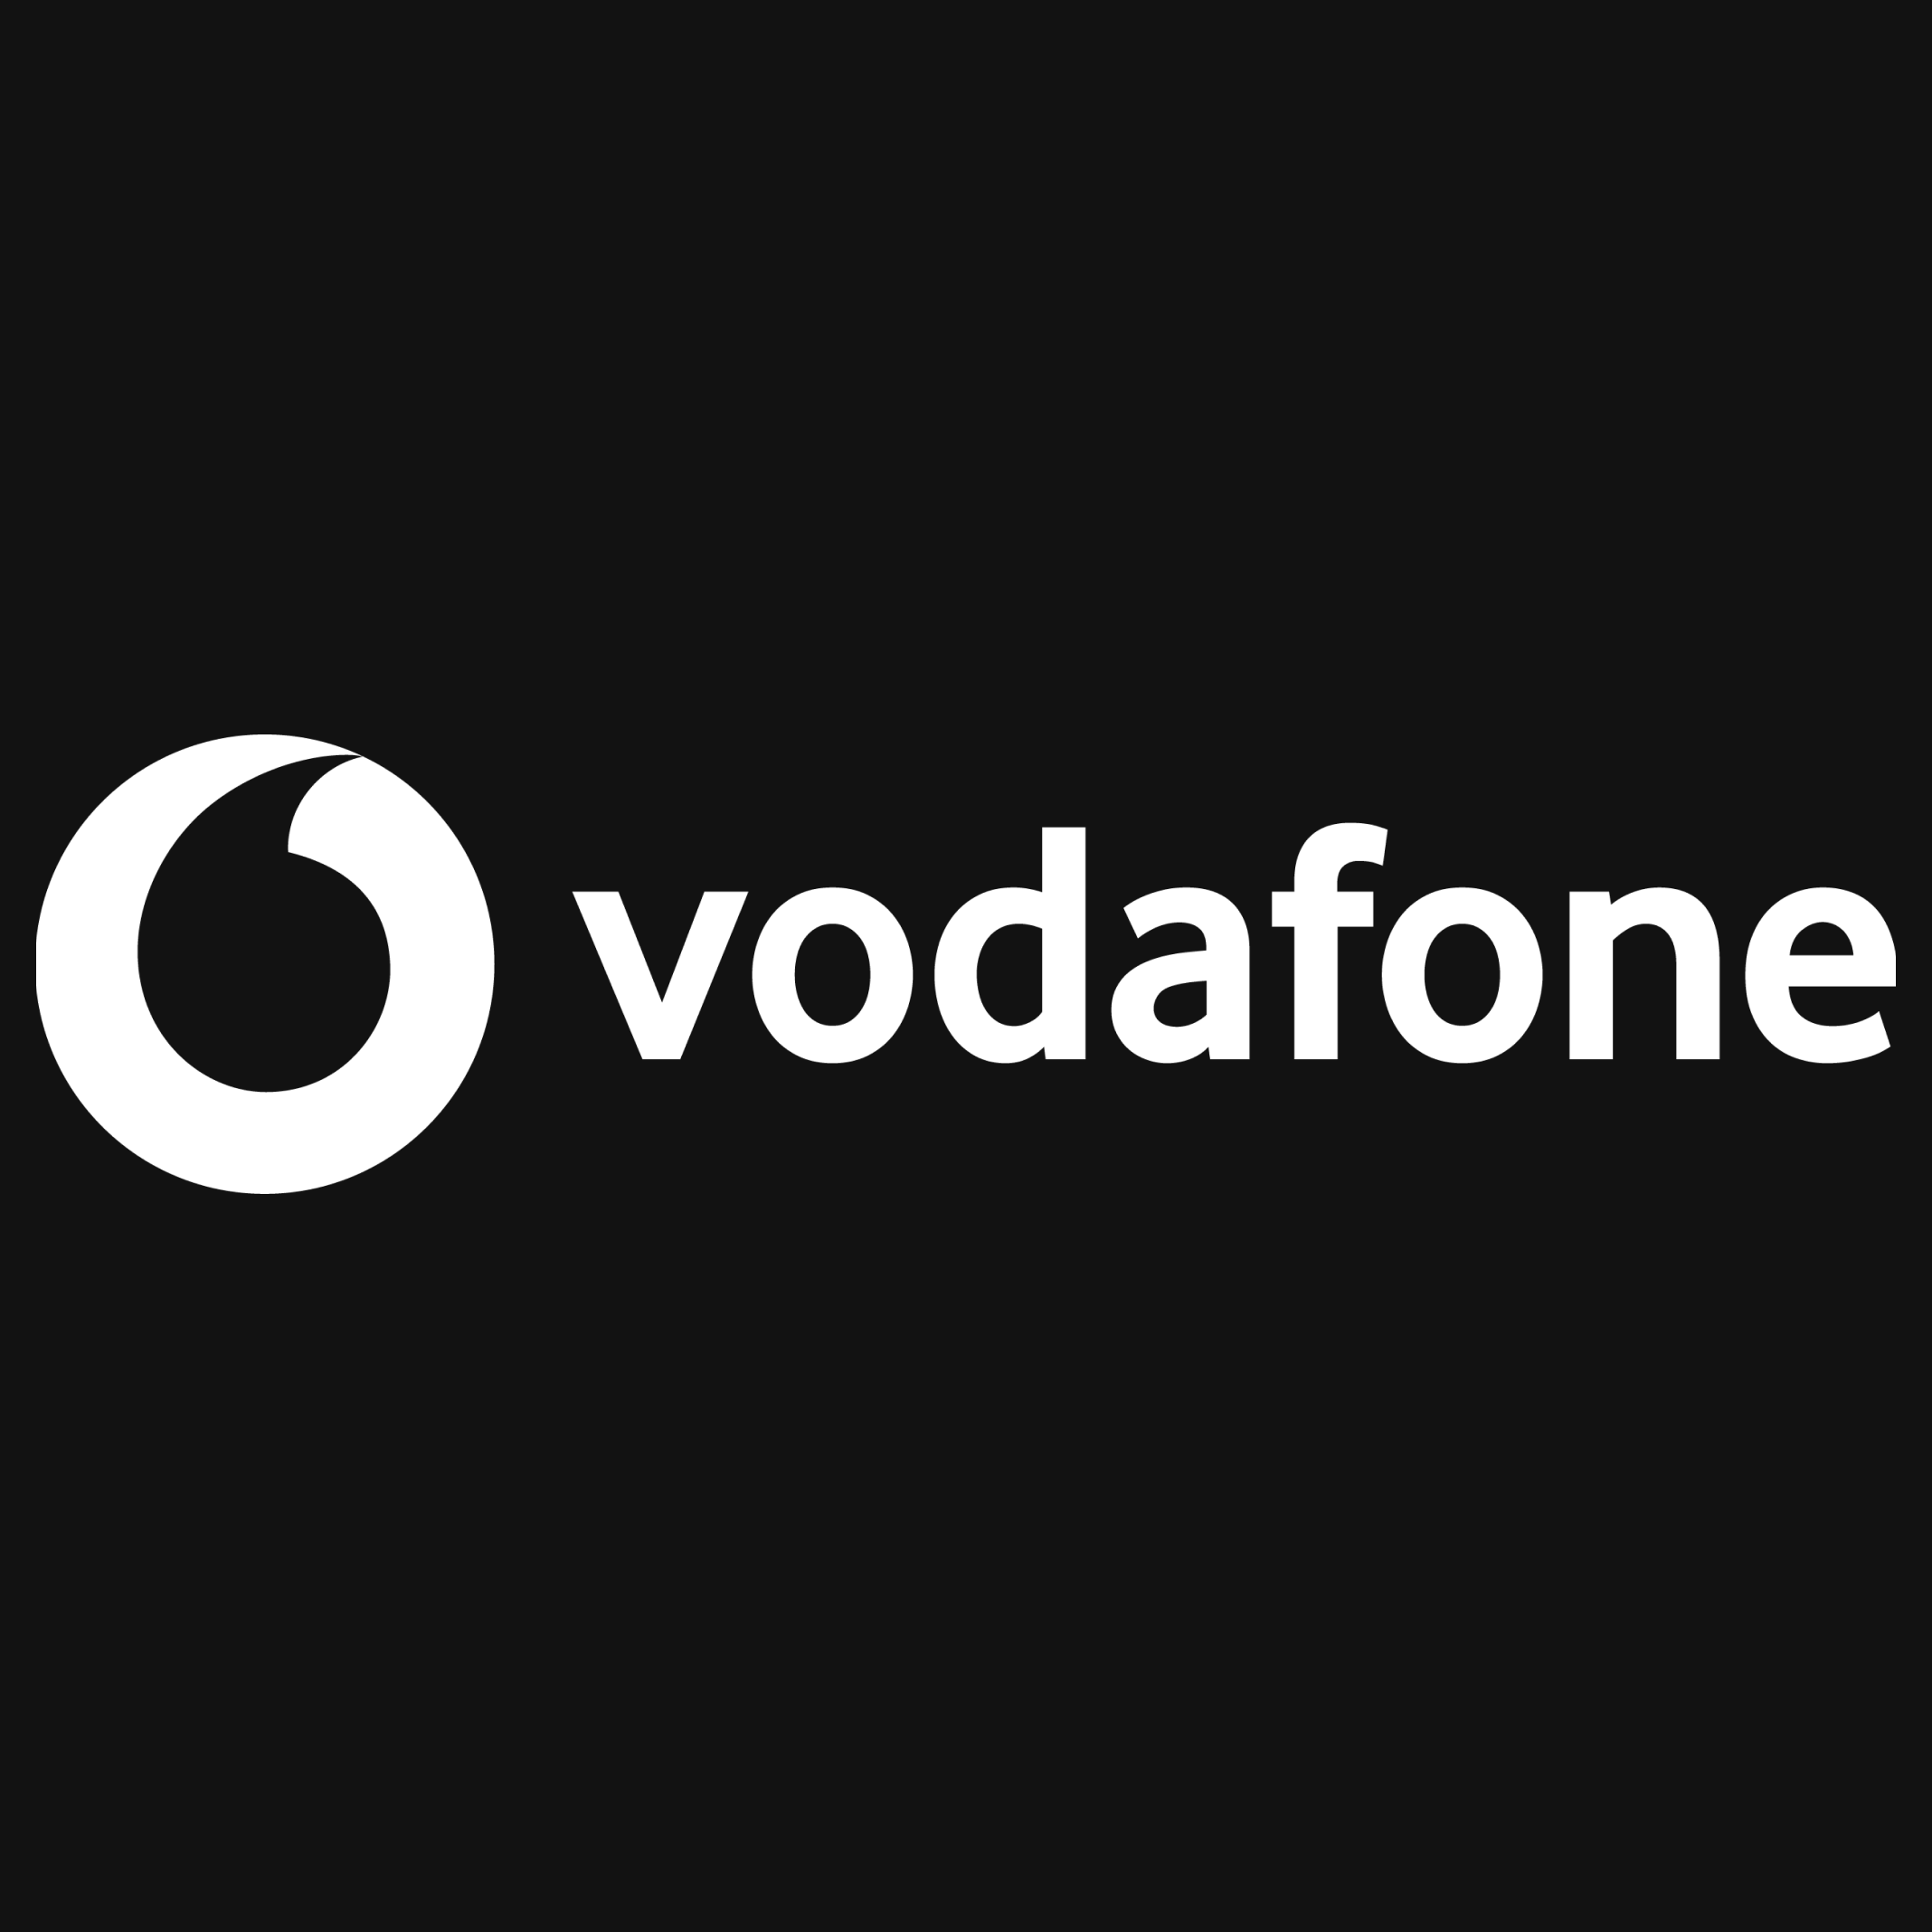 Vodafone black and white logo